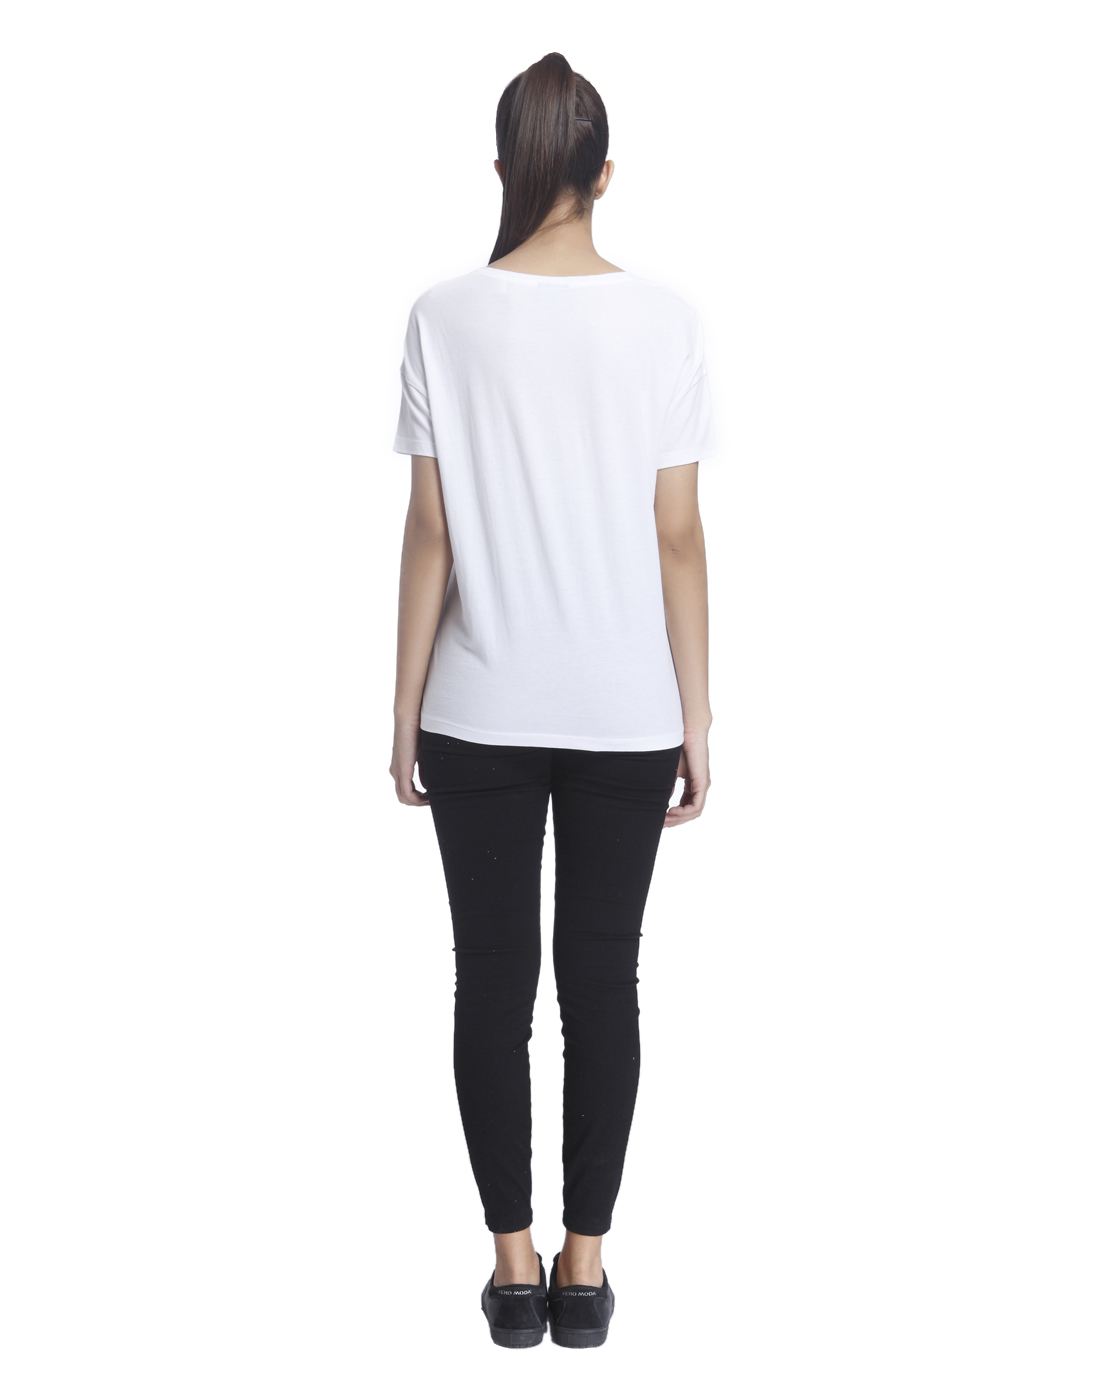 Vero Moda Women Graphic Print Casual Wear White T-Shirt